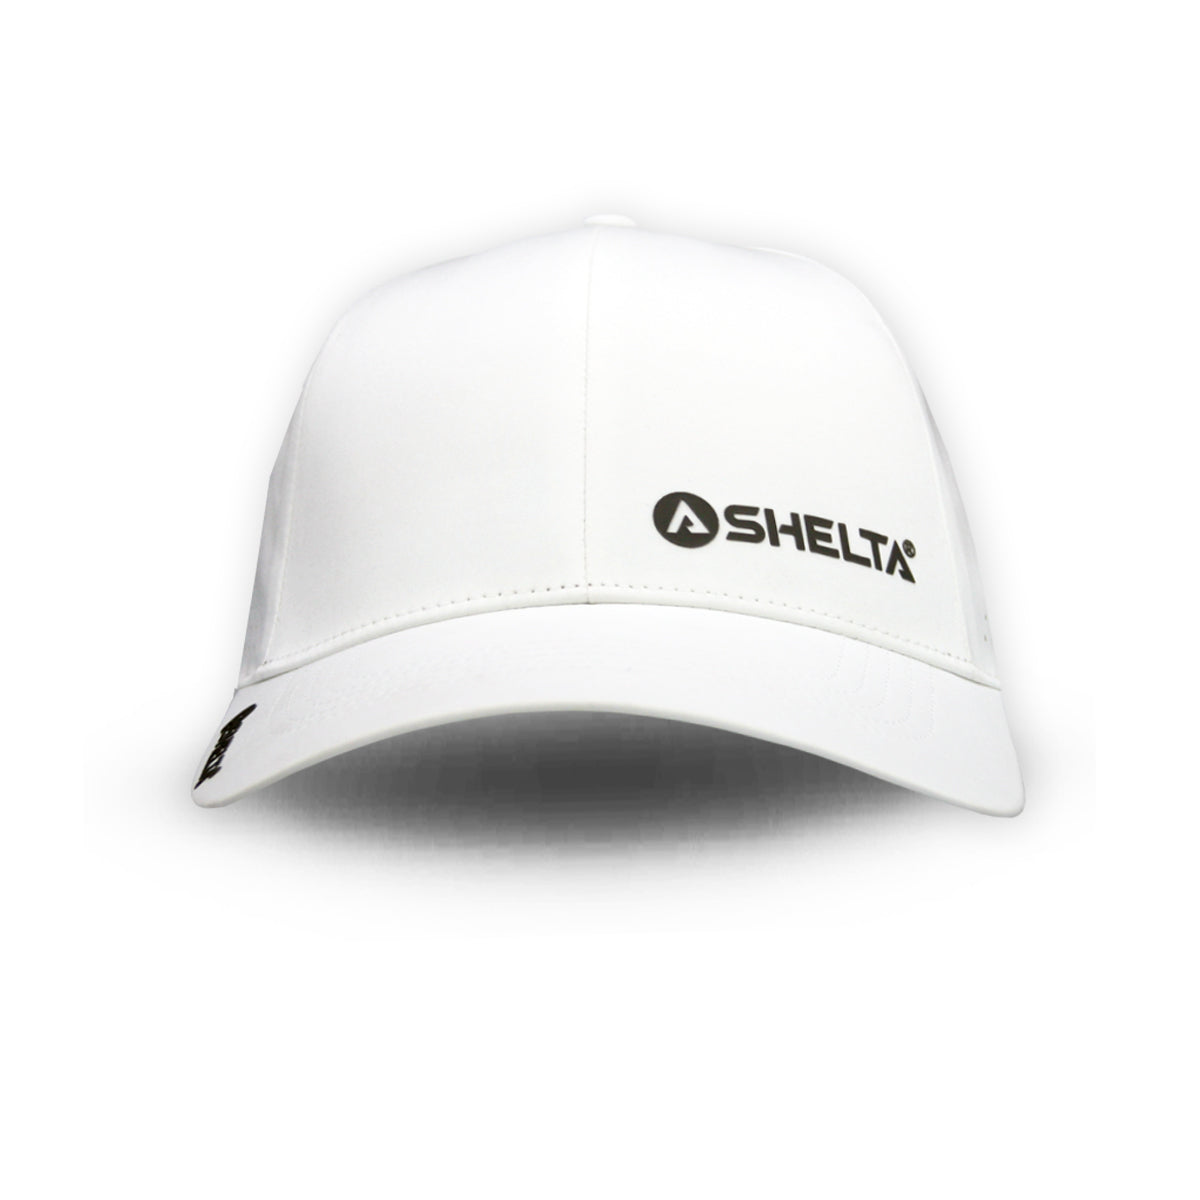 The Shelta V2 Tech Cap in Brilliant White